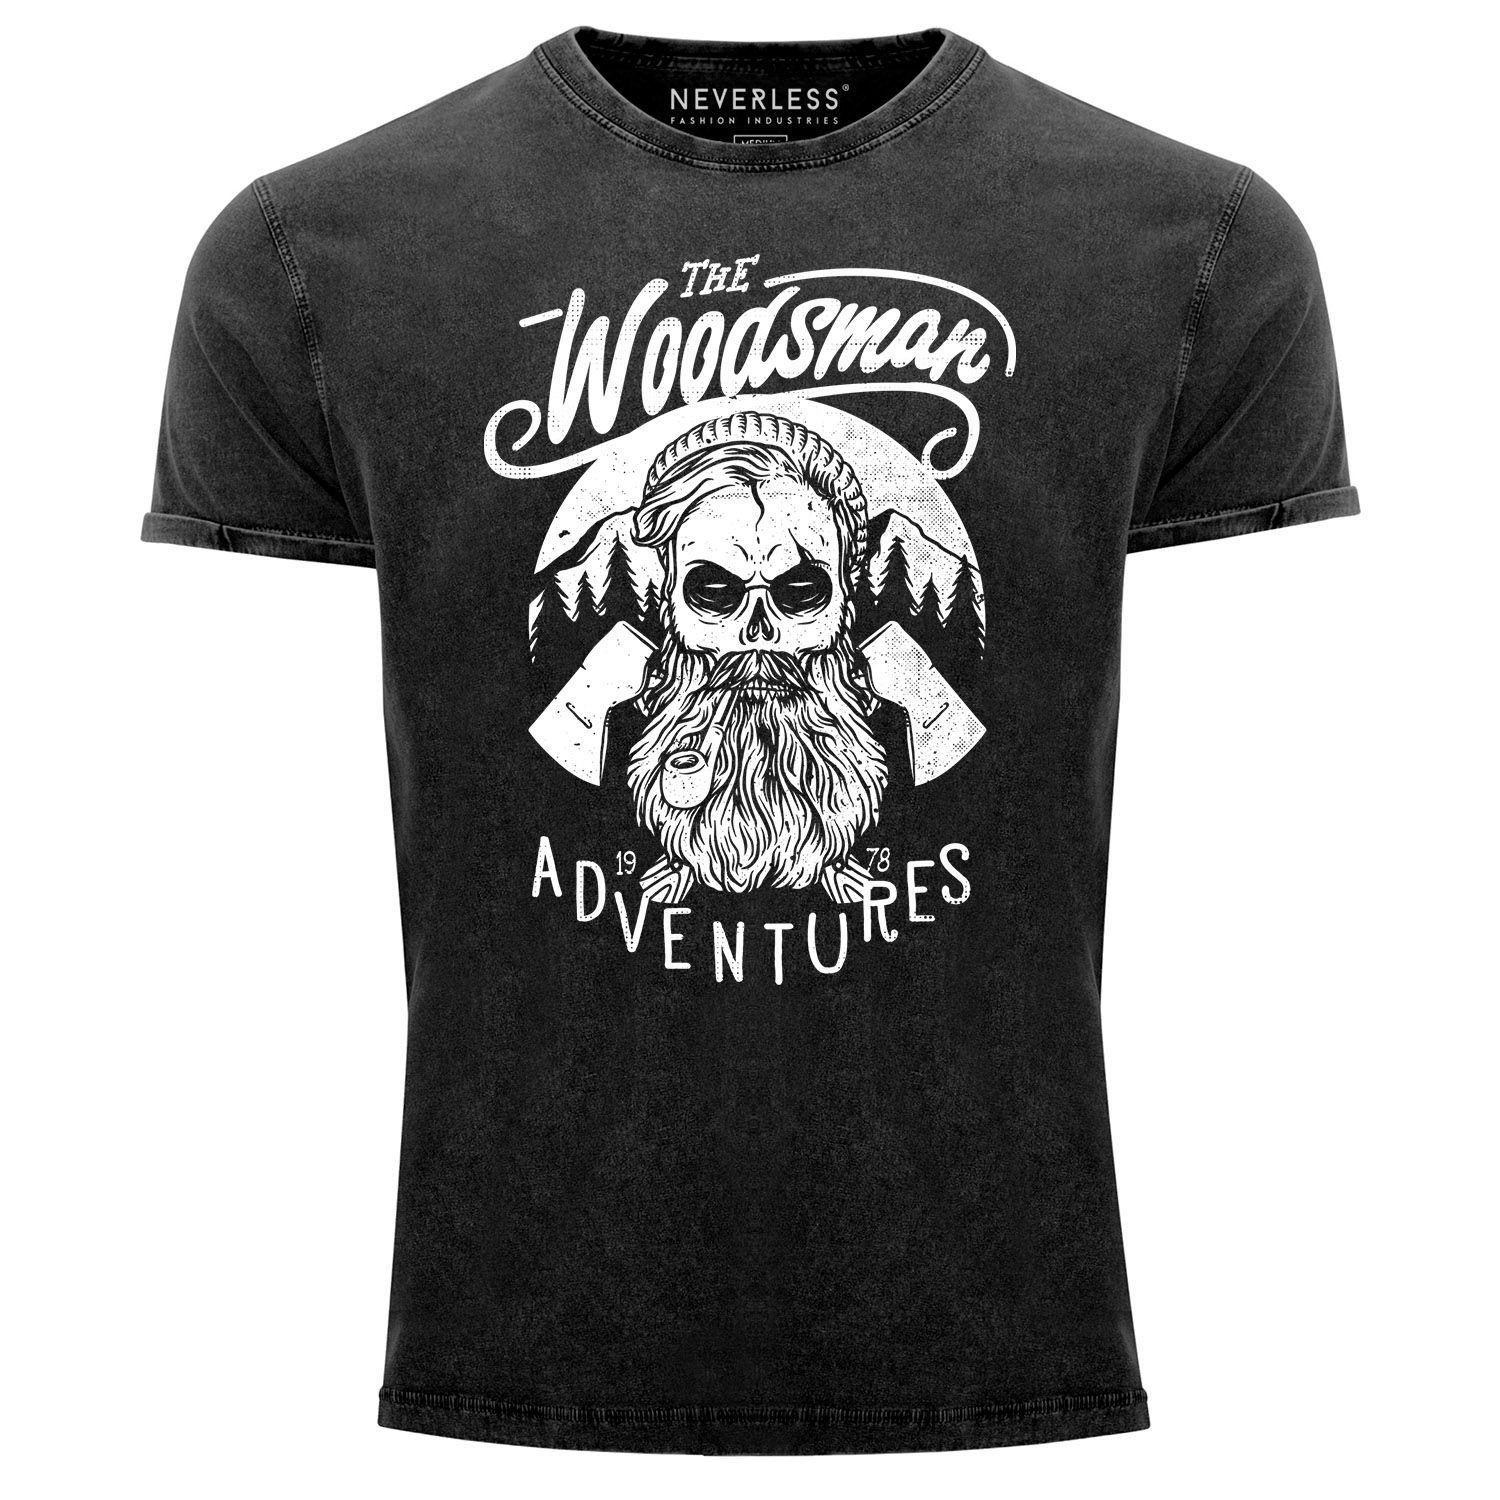 Neverless Print-Shirt Cooles Angesagtes Herren Vintage Woodsman T-Shirt mit Bart Fit Aufdruck Neverless® Hipster Print schwarz Used Skull Slim Shirt Lumberjack Look